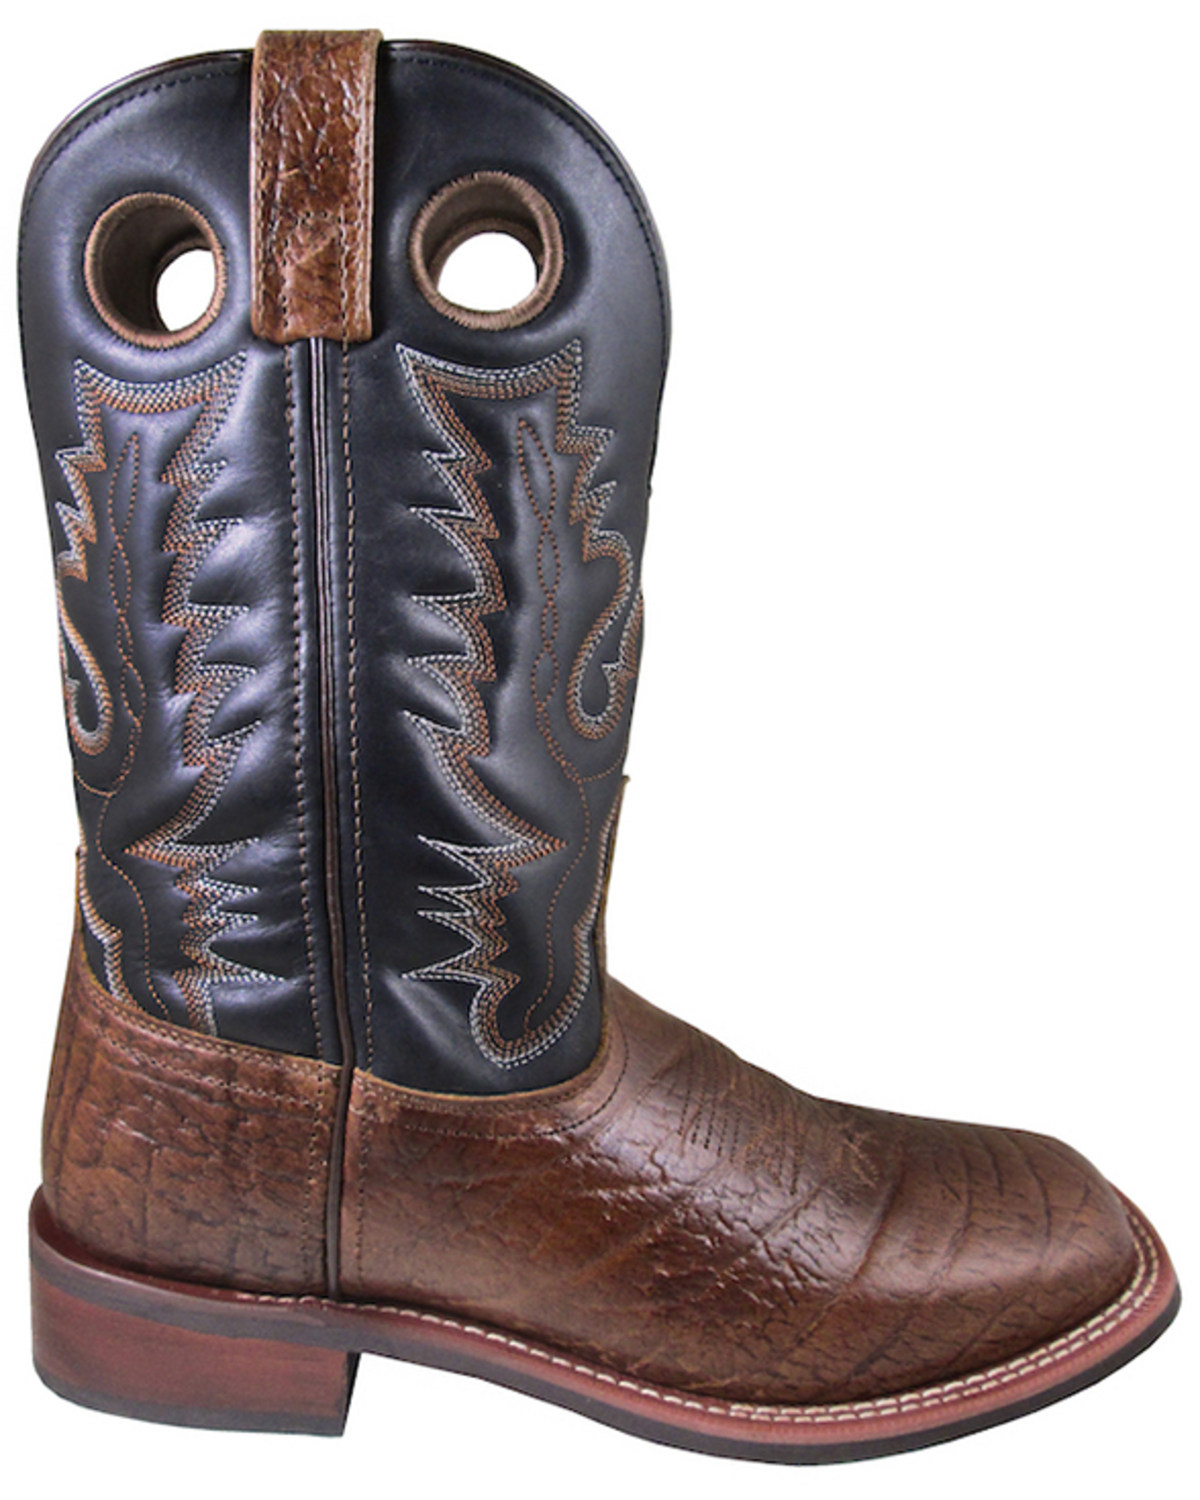 Smoky Mountain Men's Wyatt Western Boots - Broad Square Toe